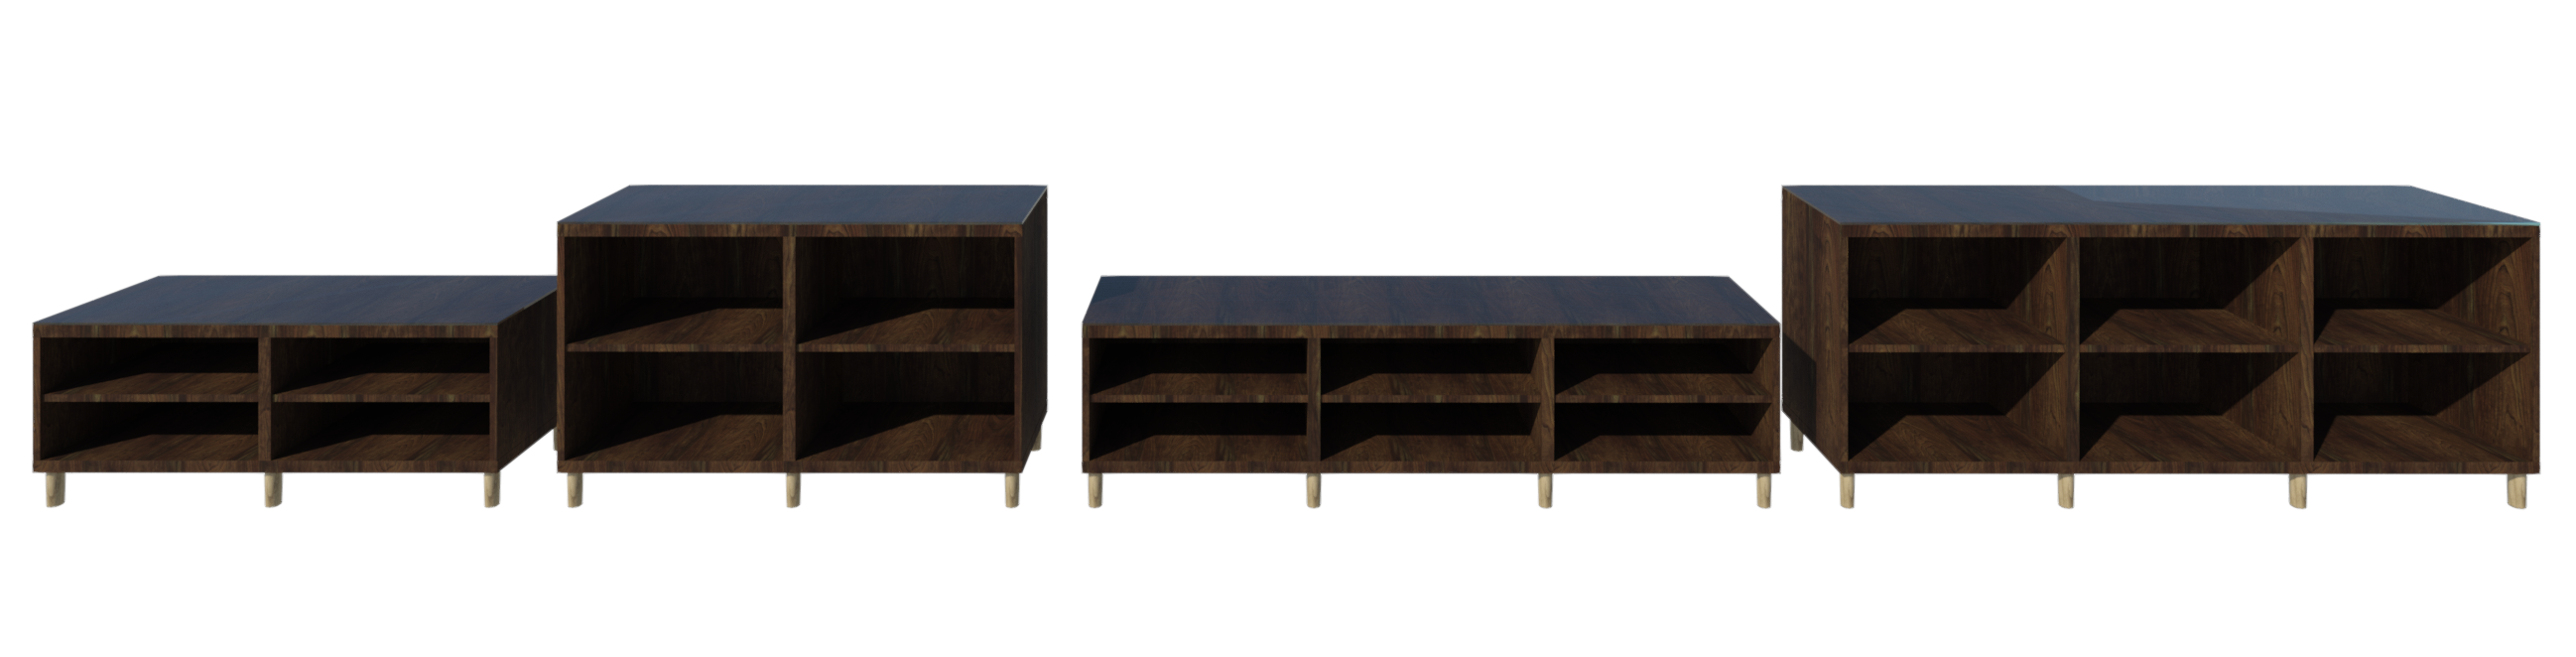 Revit render of 4 differently-sized, open-shelved Besta TV Unit cupboards in dark wood finish.